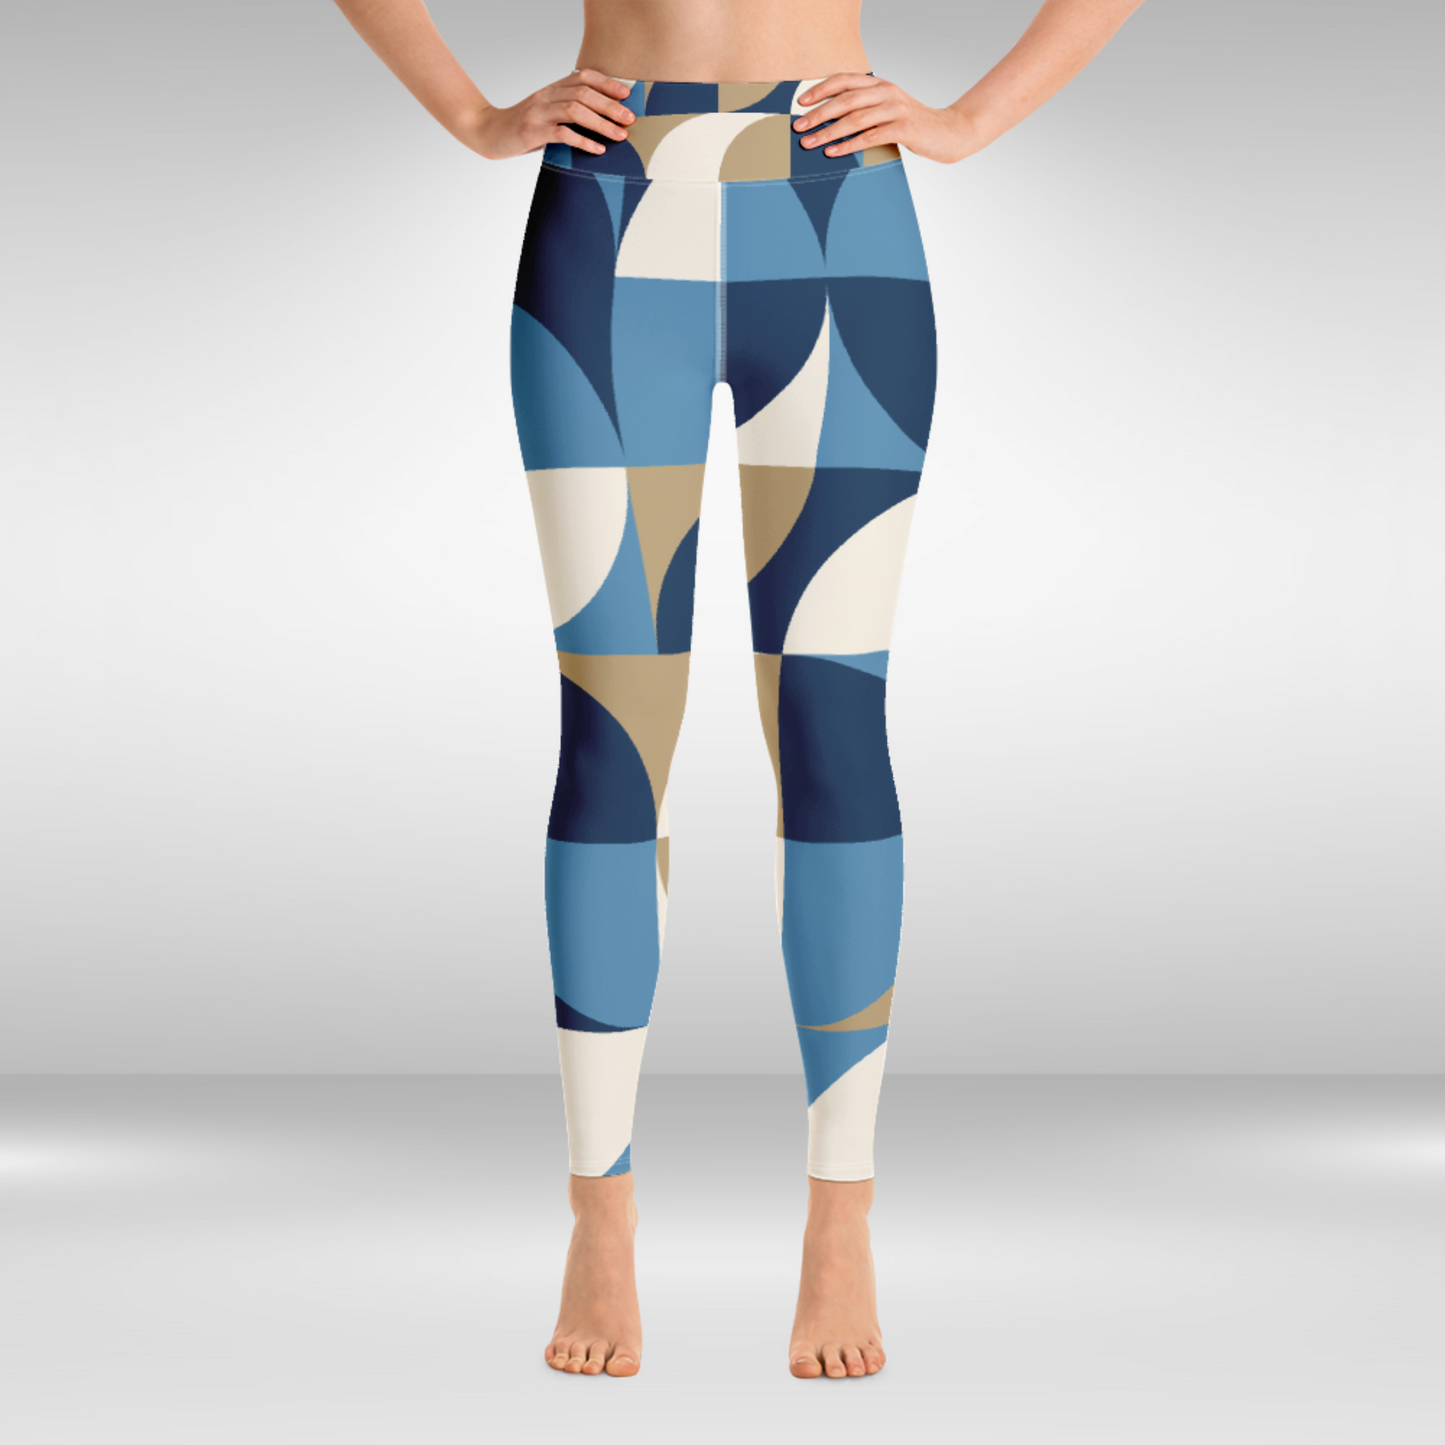 Women Yoga Legging - Blue and Khaki Abstract Print